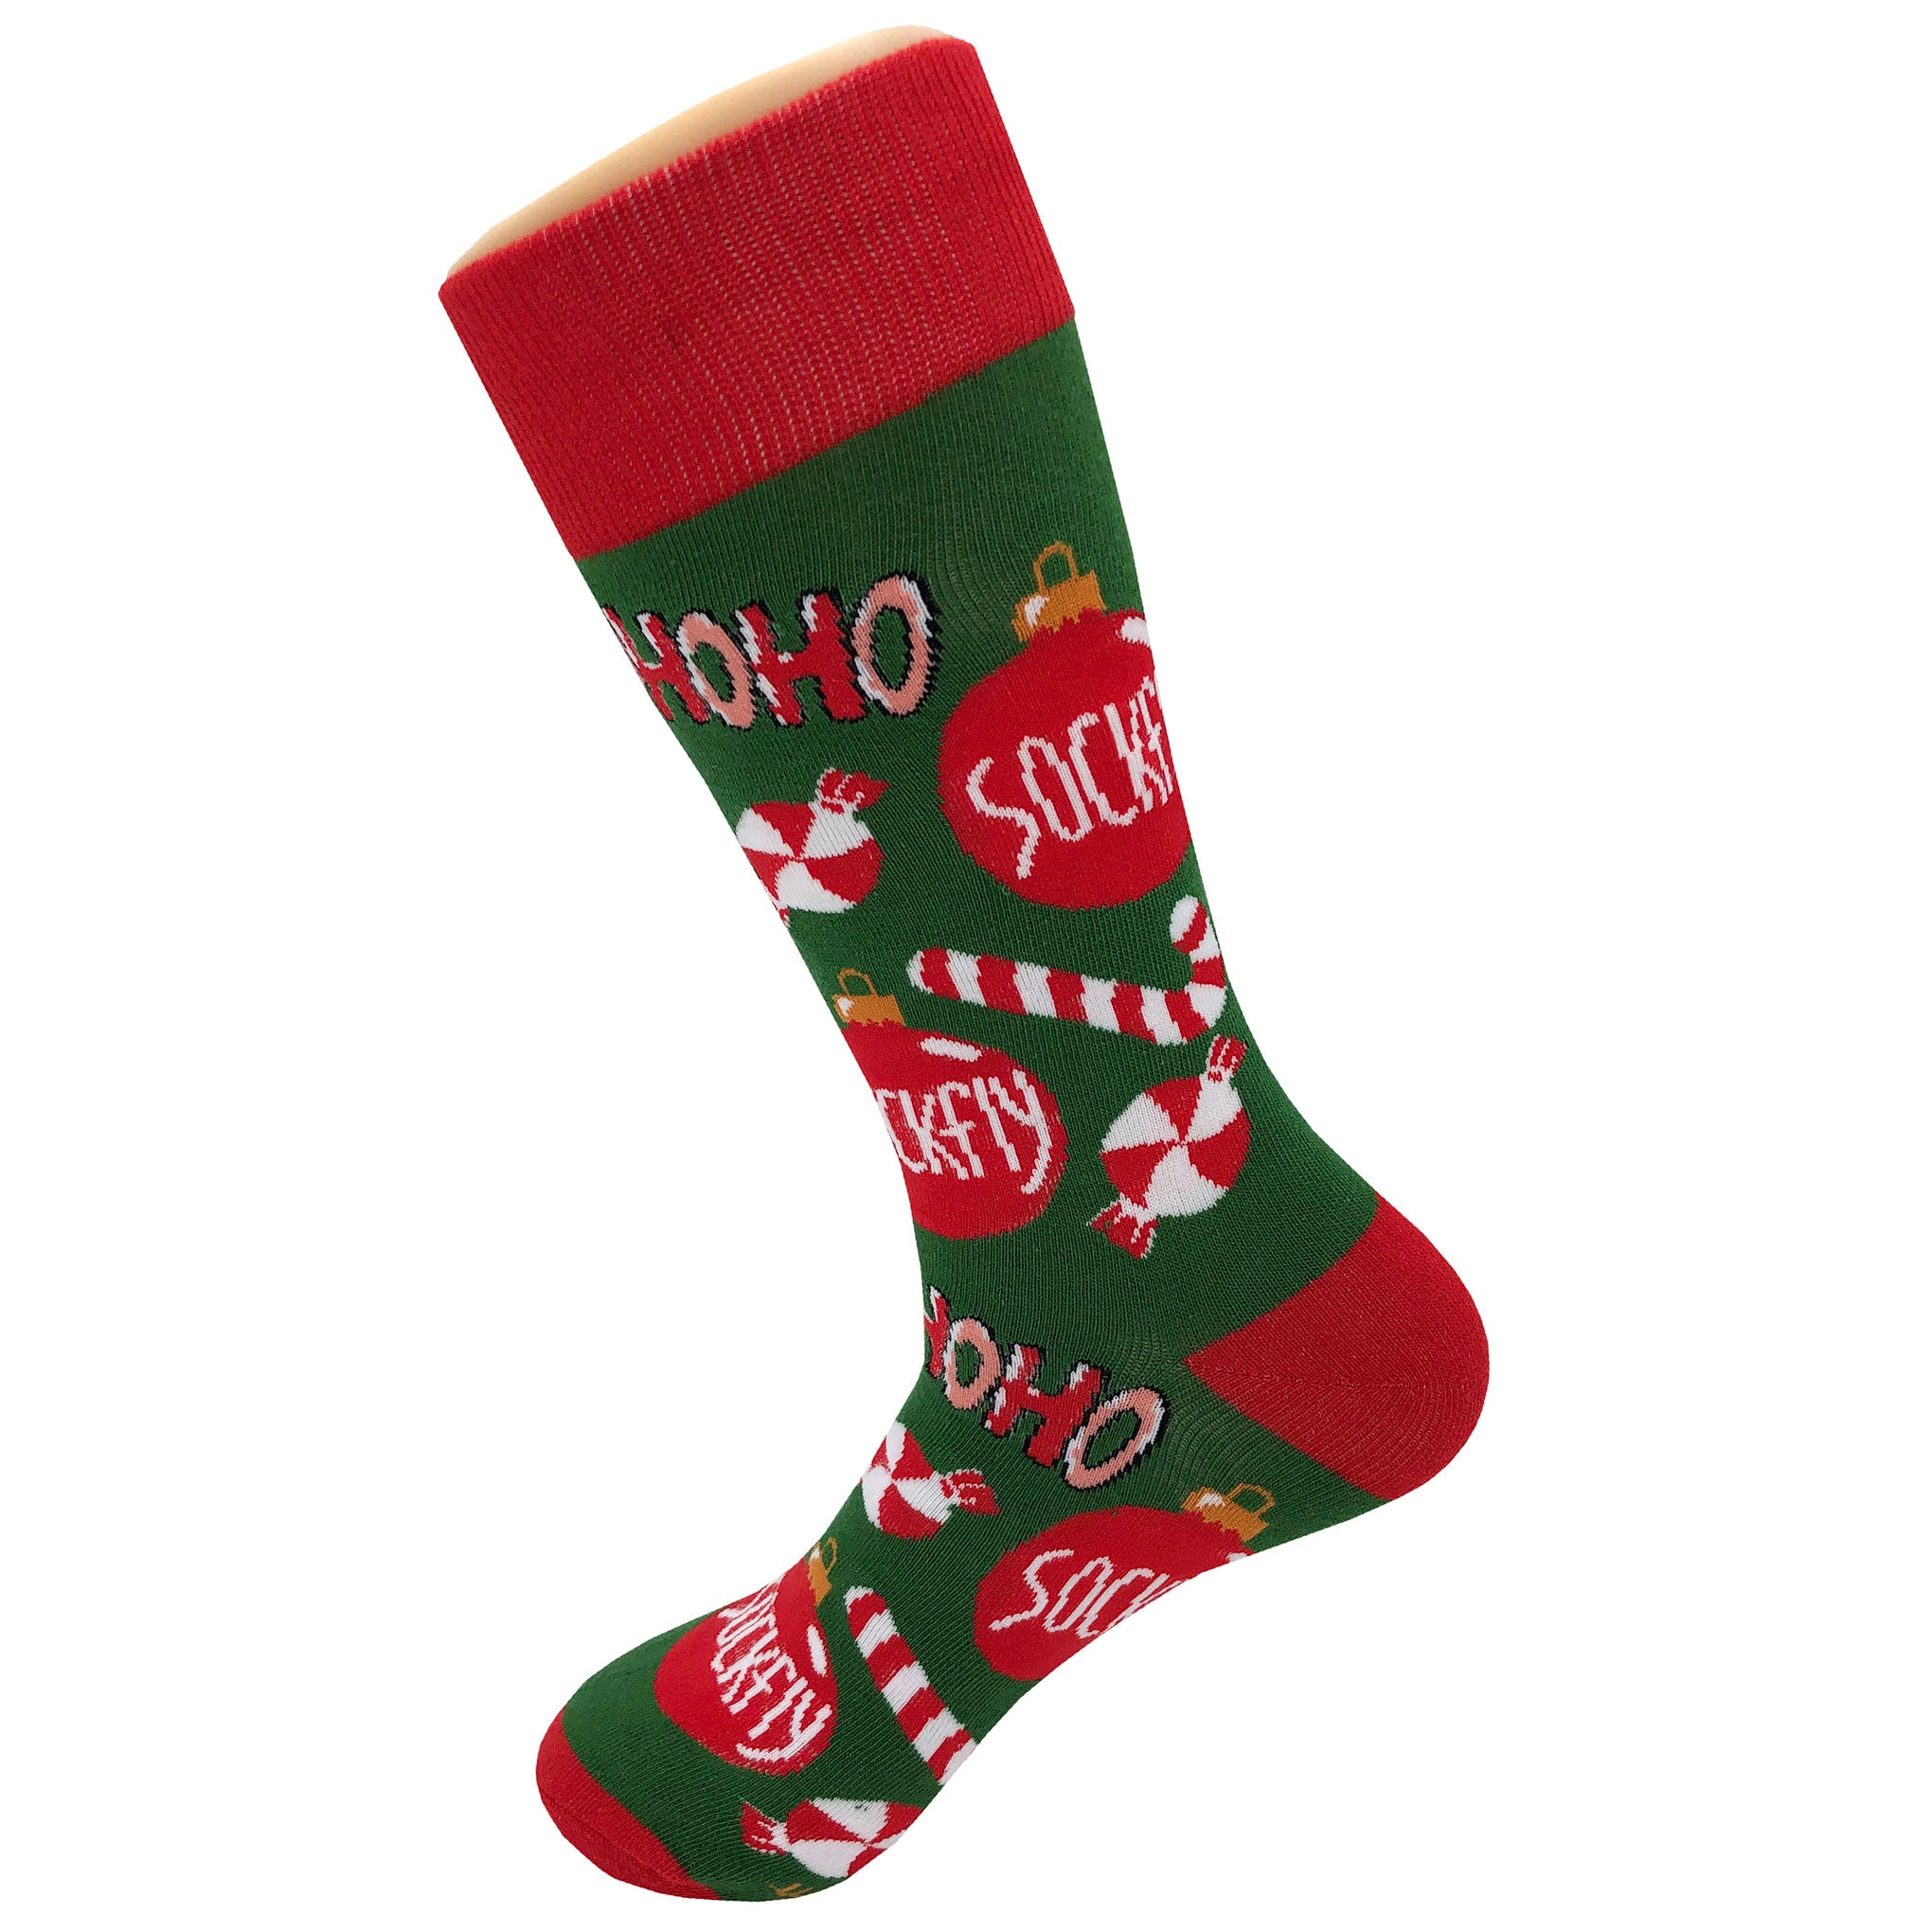 Crazy Christmas Socks - Fun and Crazy Socks at Sockfly.com